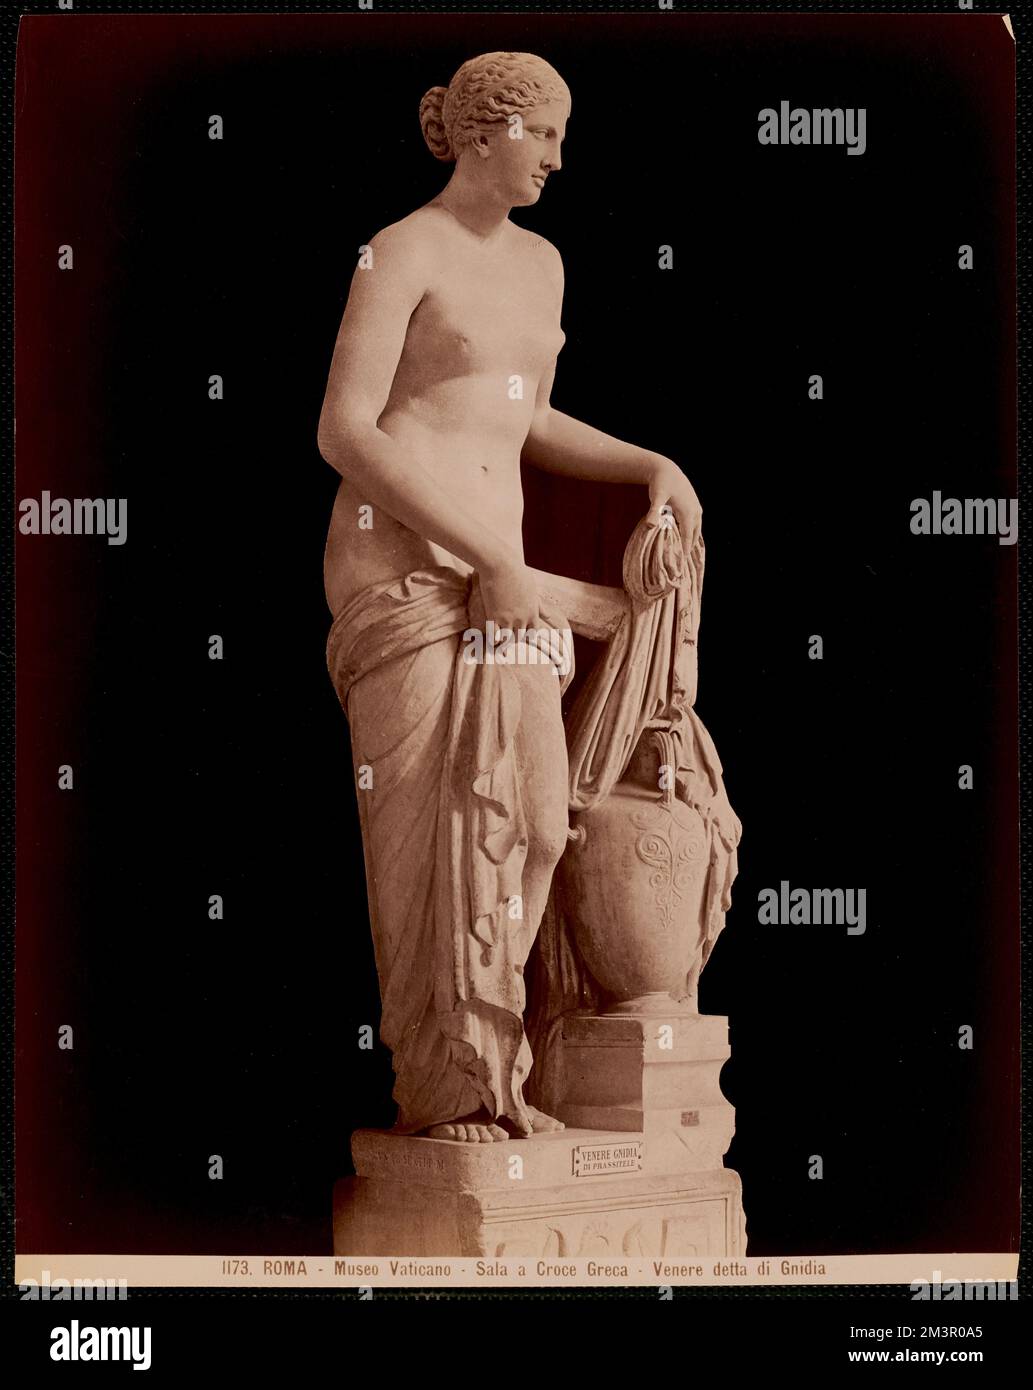 Roma - Museo Vaticano - Sala a croce Greca - Venere detta di Gnidia , Antiquities, Sculpture, Goddesses, Venus Roman deity. Nicholas Catsimpoolas Collection Stock Photo